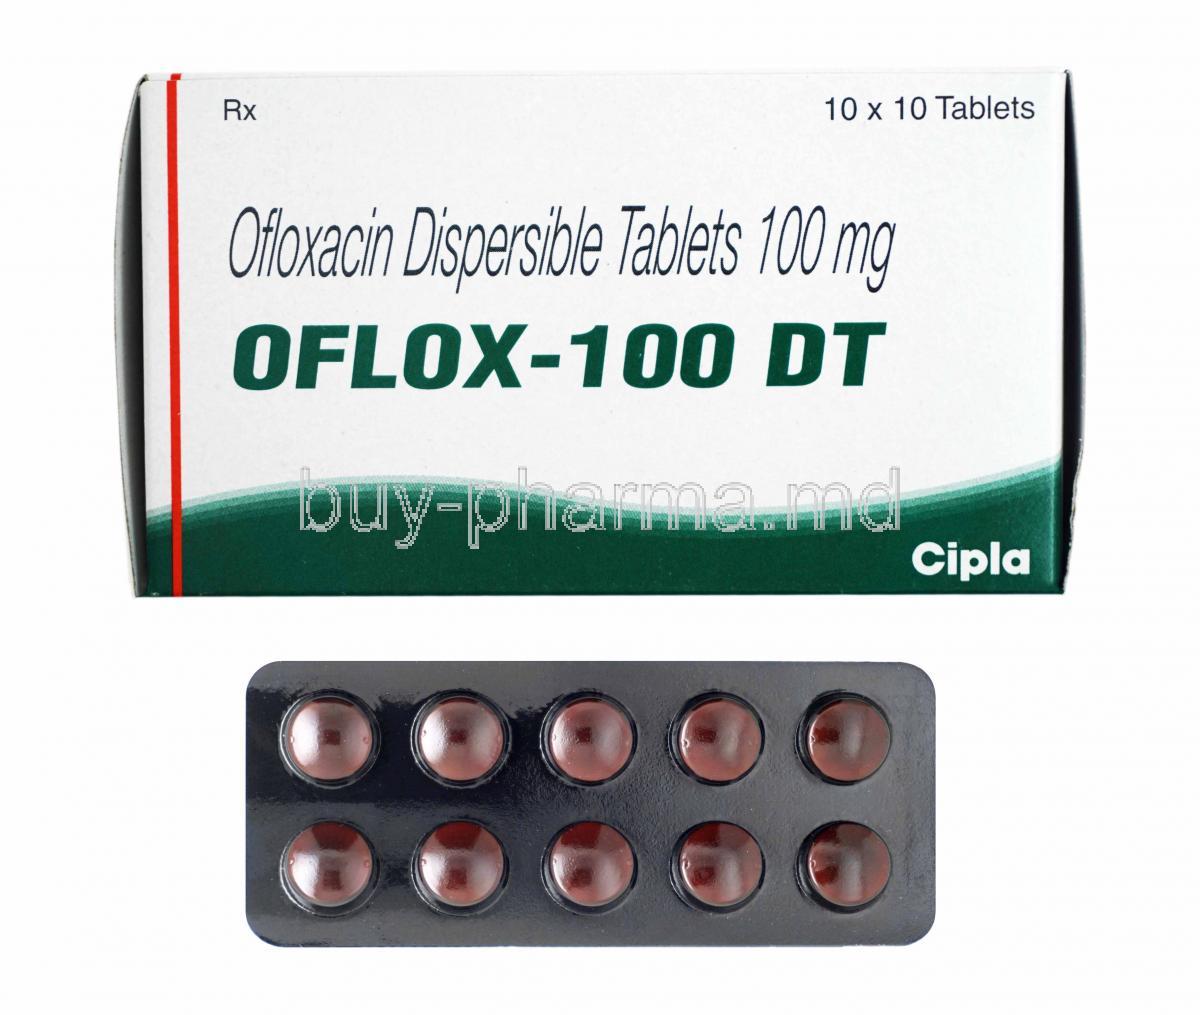 Oflox, Ofloxacin 100mg box and tablets